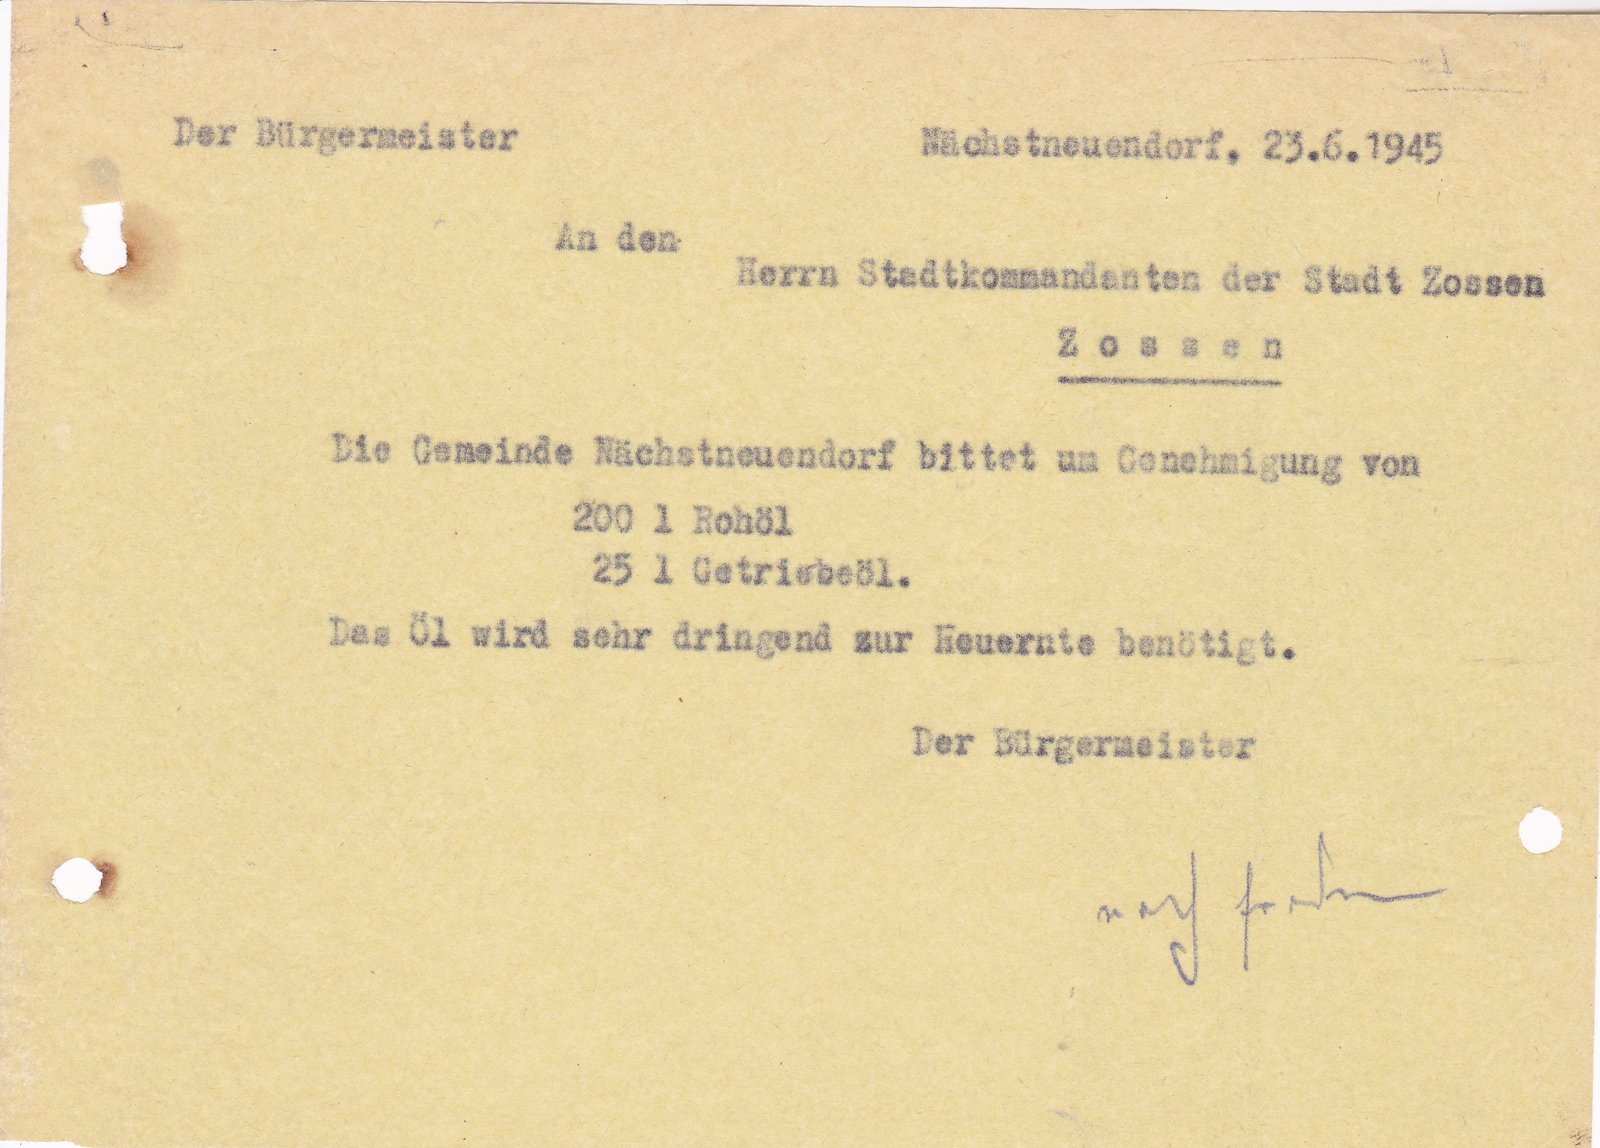 BM N. Neuendorf an Stadtkommandant, 23.06.1945 (Heimatverein "Alter Krug" Zossen e.V. CC BY-NC-SA)